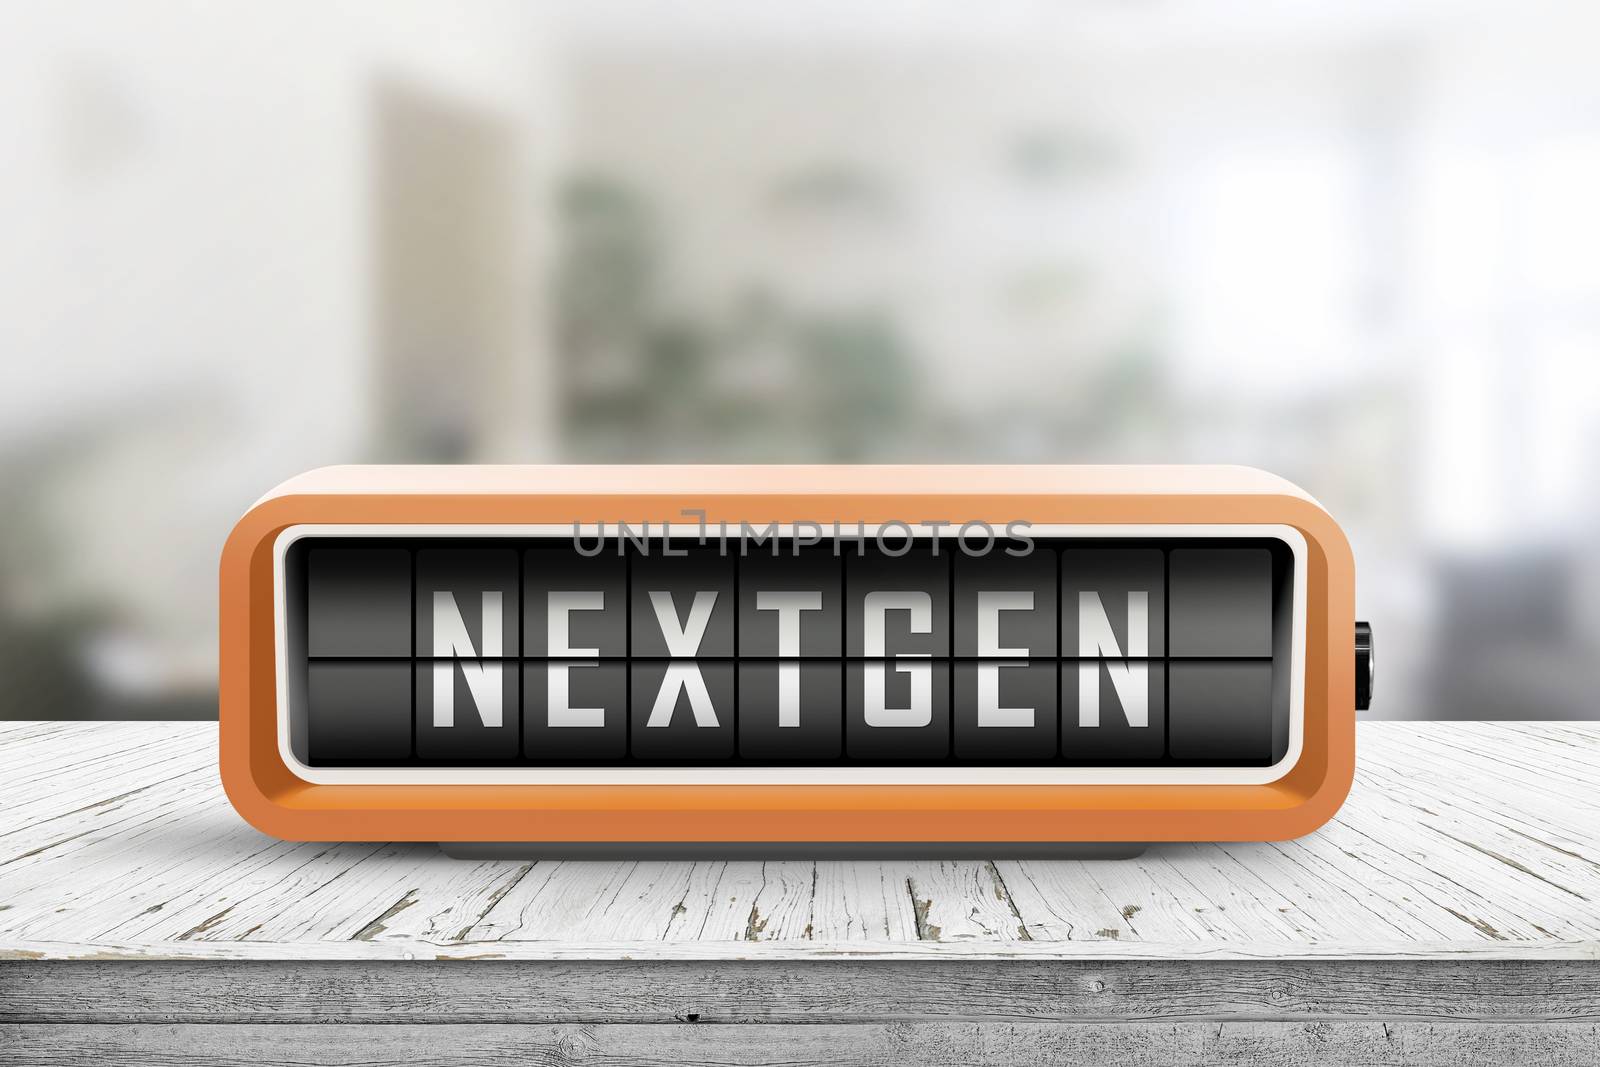 Nextgen word on an alarm device in orange color on a wooden desk in a living room